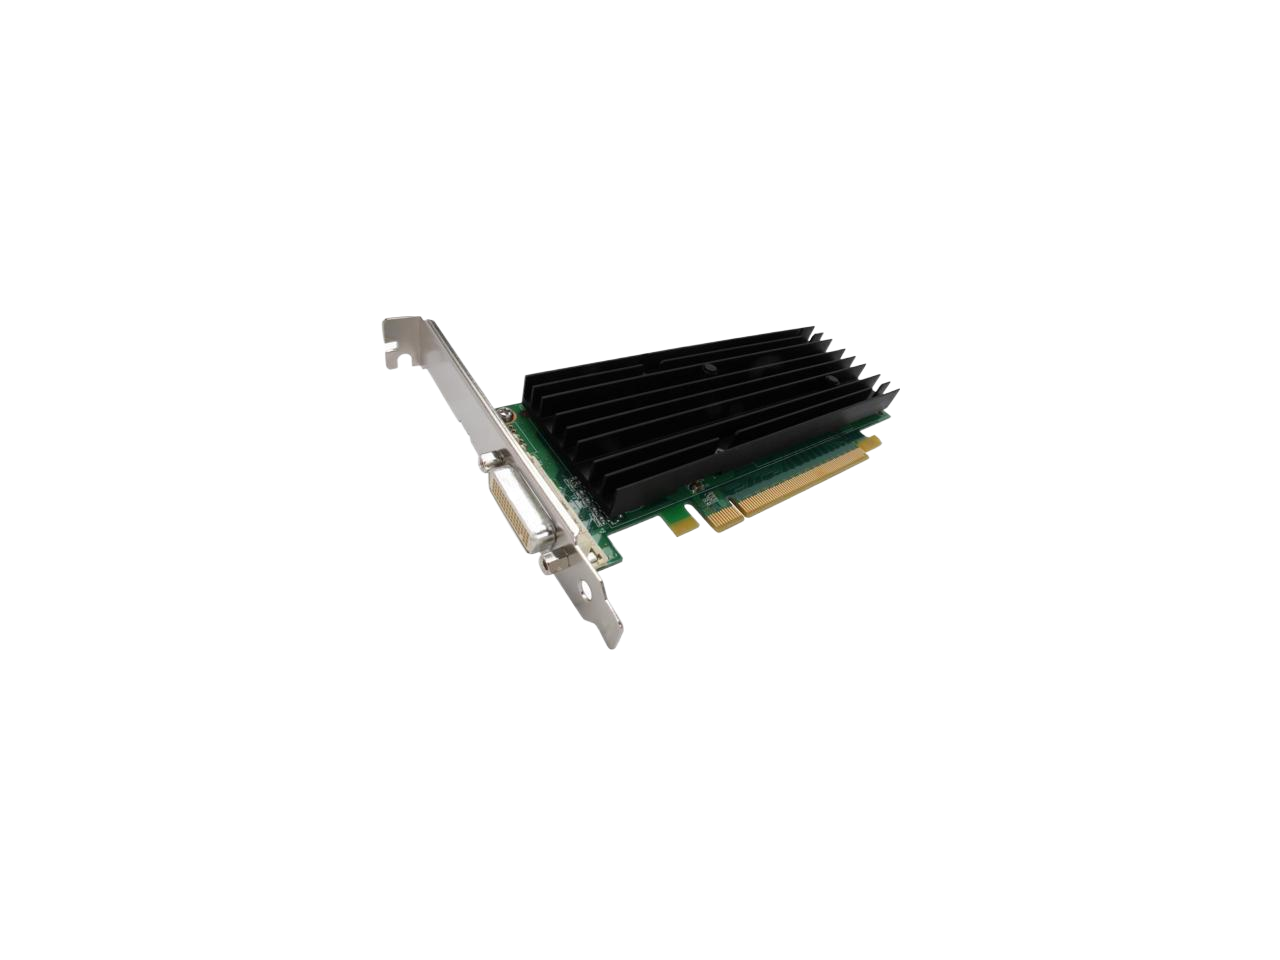 PNY NVIDIA Quadro NVS 290 by PNY 256MB DDR2 PCI Express x16 DMS-59 to Dual DVI-I SL or VGA Profesional Business Graphics Board VCQ290NVS-PCIEX16-PB